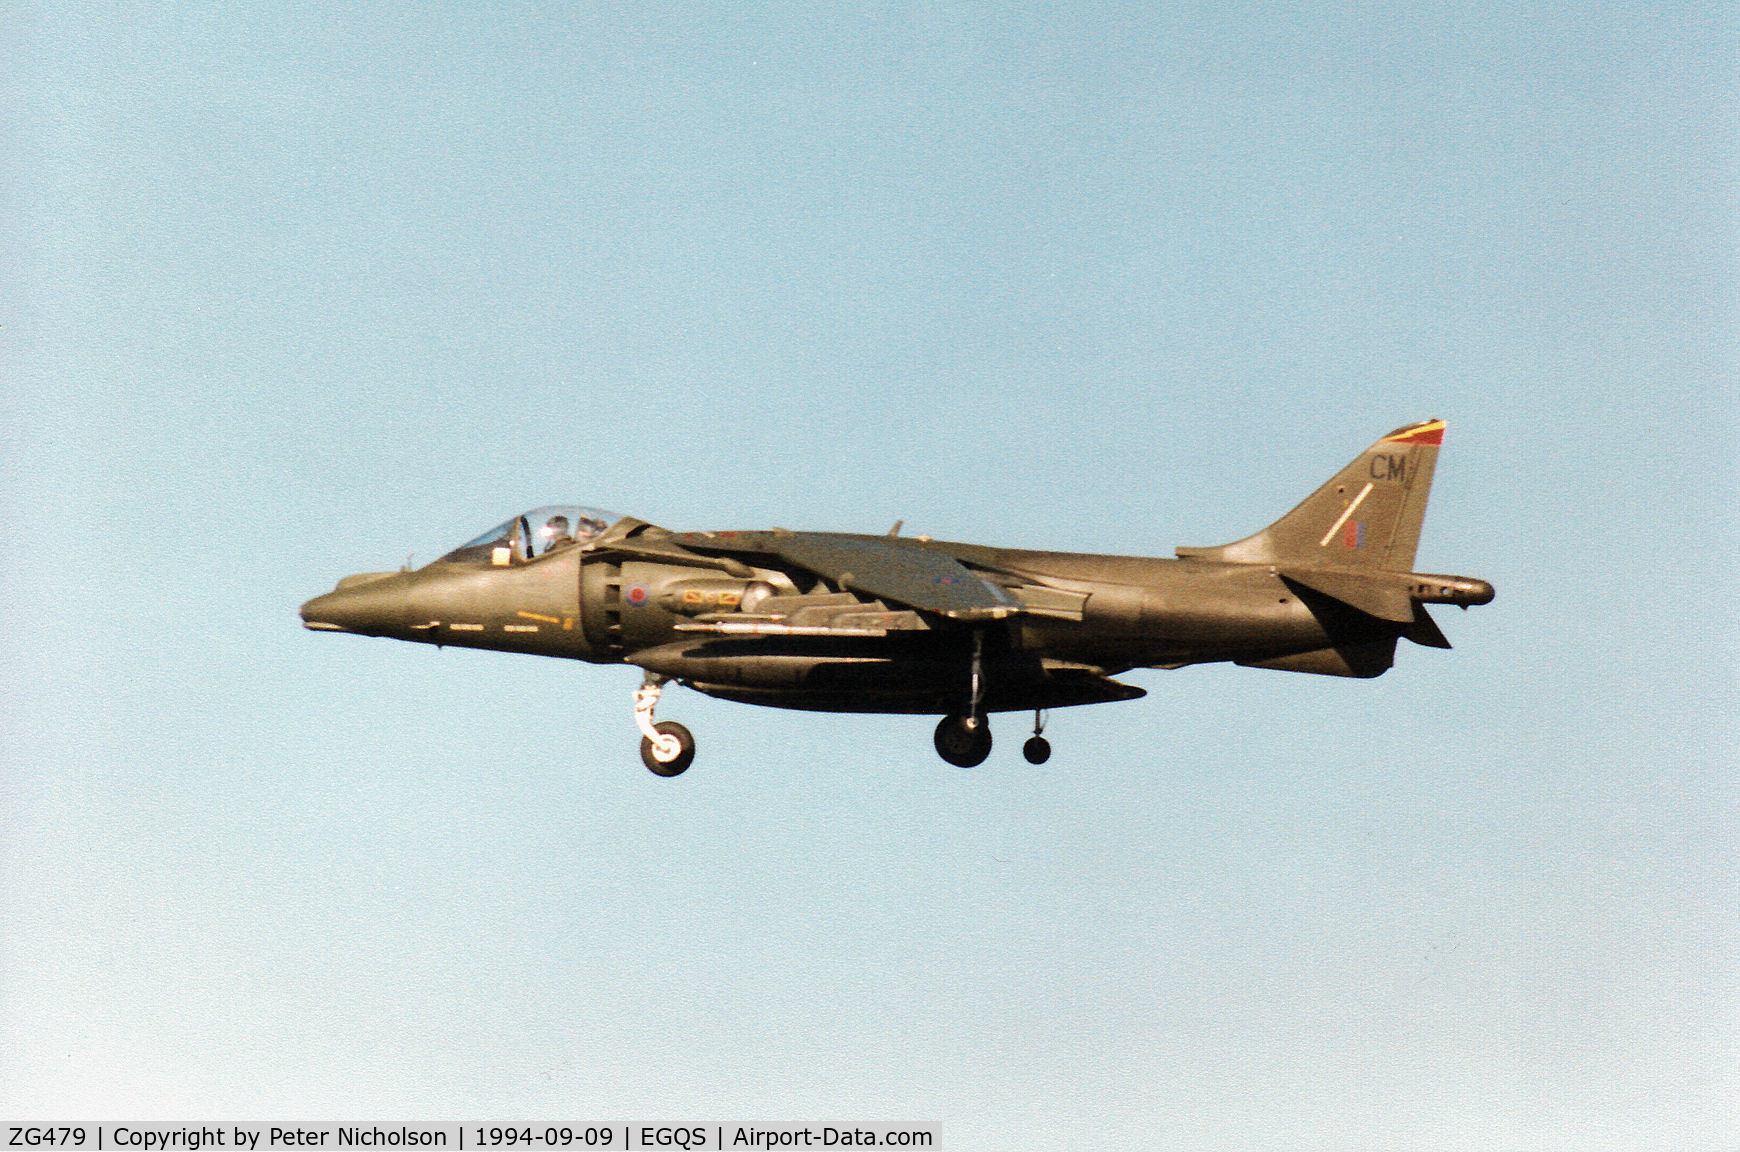 ZG479, 1990 British Aerospace Harrier GR.7 C/N P69, Harrier GR.7, callsign Rafair 620 Charlie, of 4 Squadron landing at RAF Lossiemouth in September 1994.